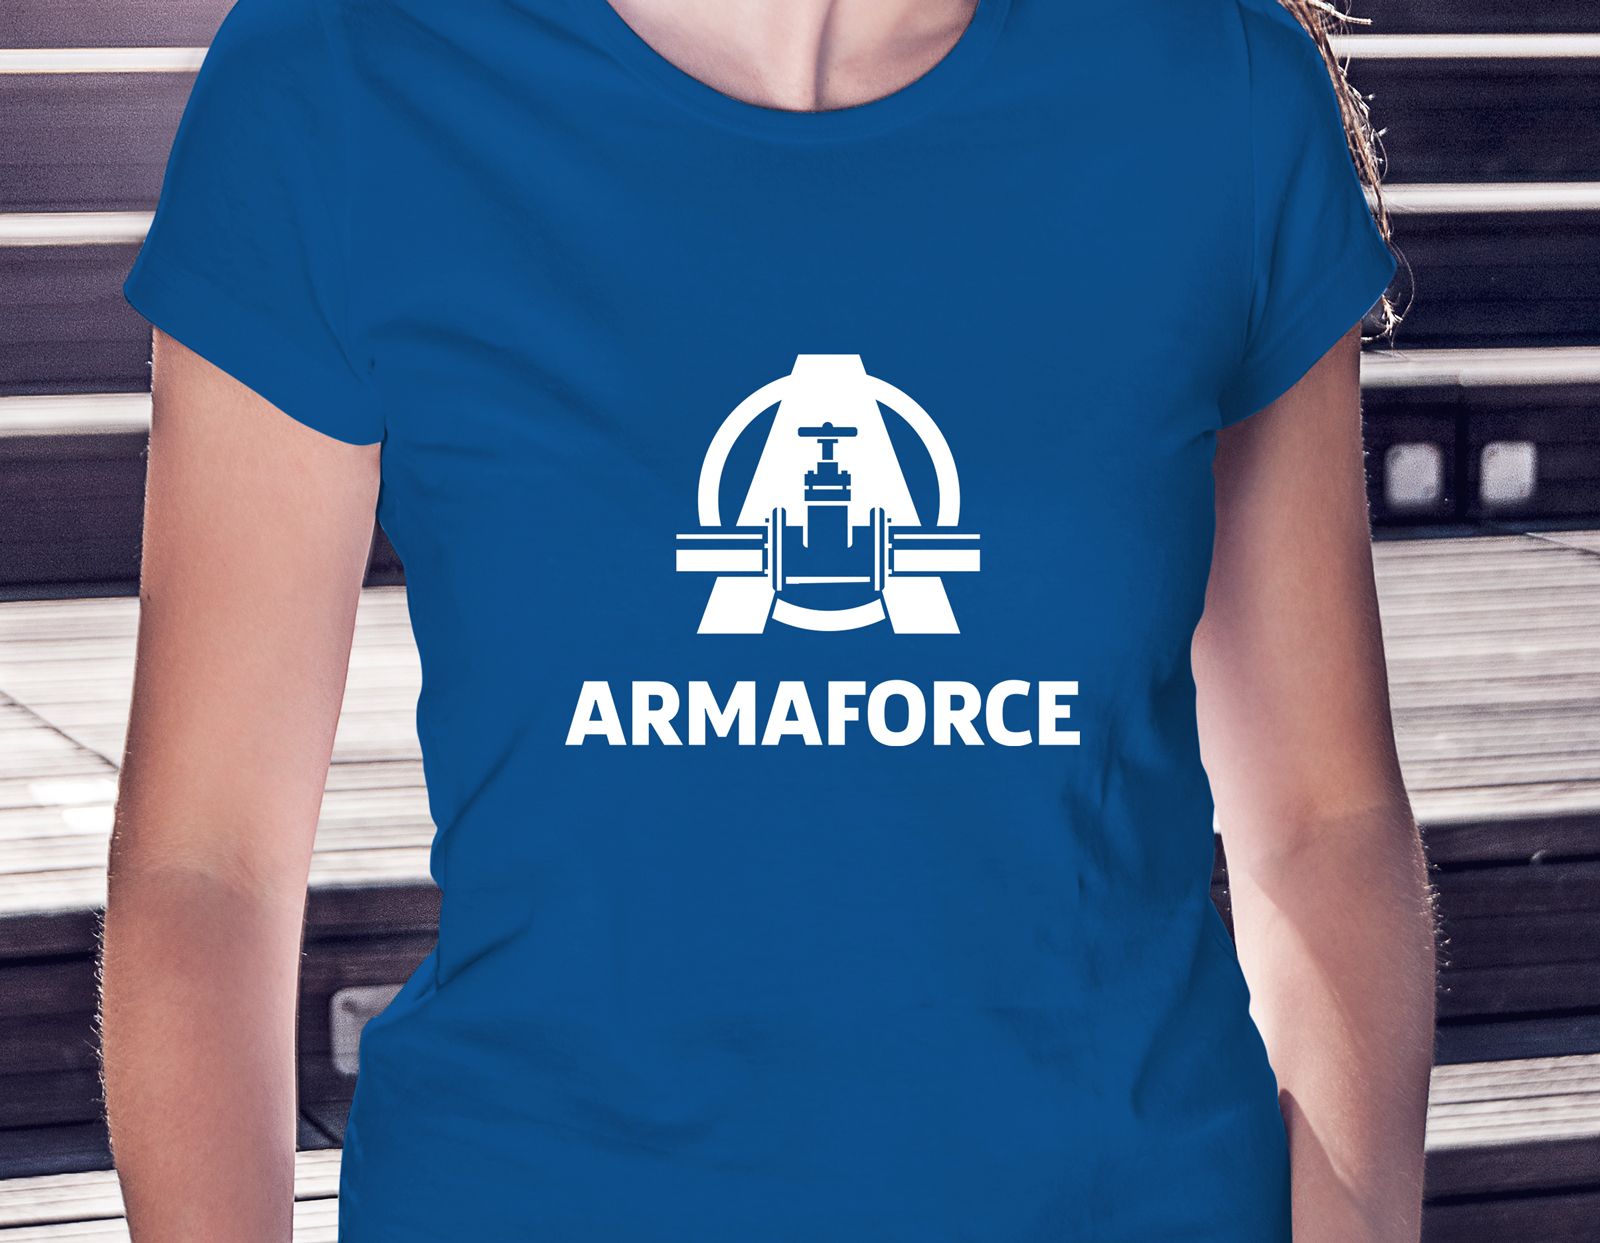 Лого и фирменный стиль для «Армаунт» «Armaunt» и «Армафорс» «Armafors»  - дизайнер luishamilton